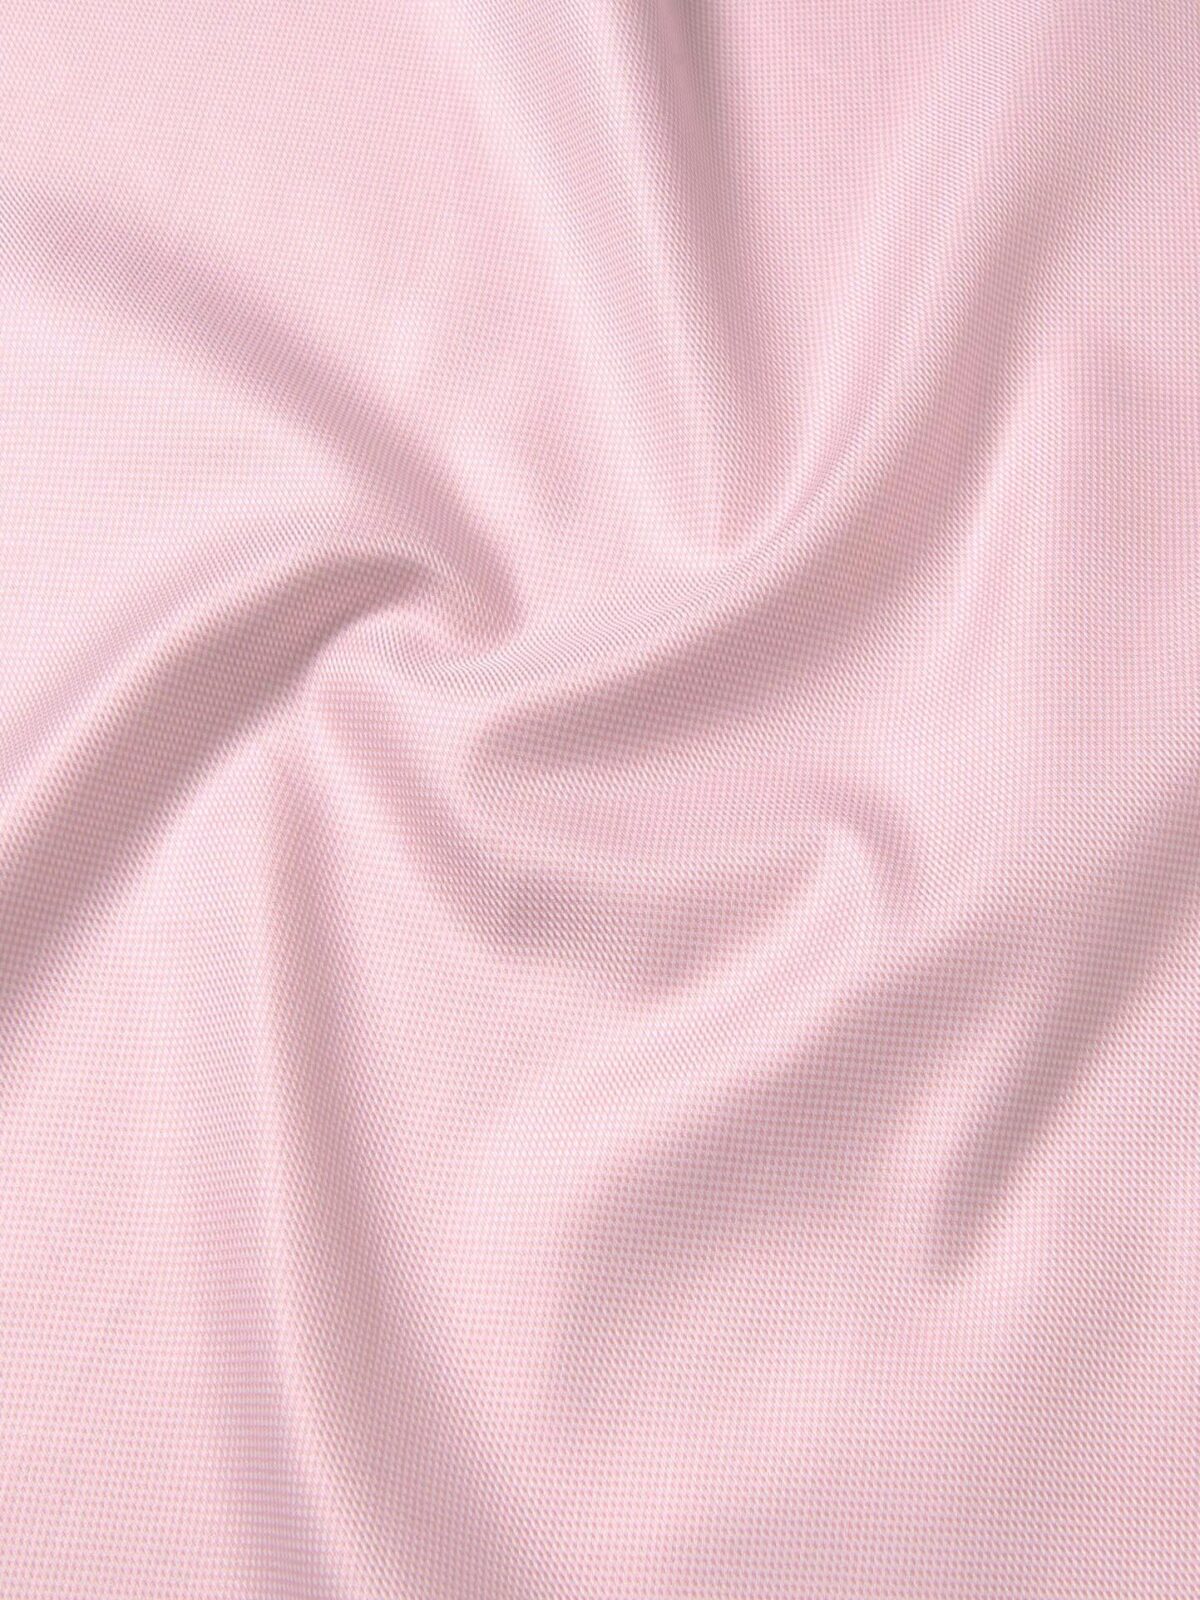 Cali Fabrics  Neon Pink Taffeta